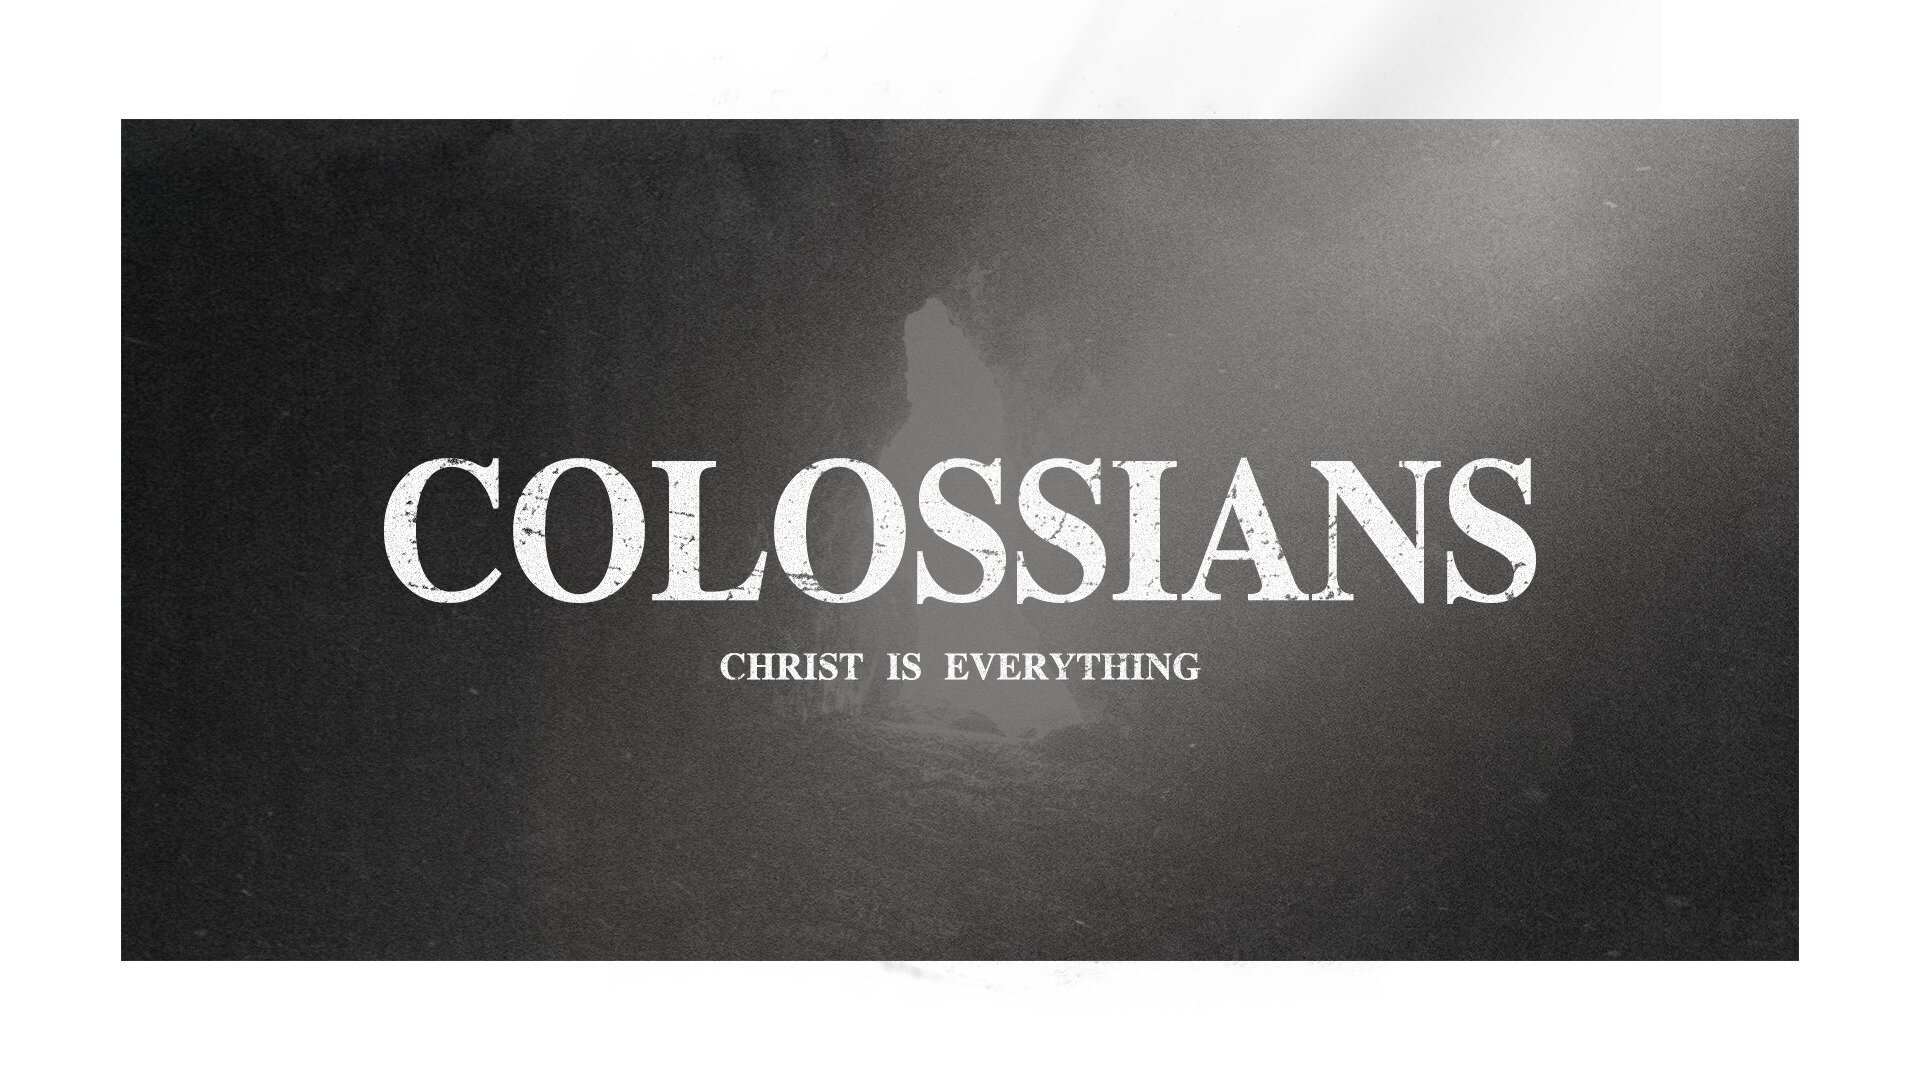 Colossians.jpg